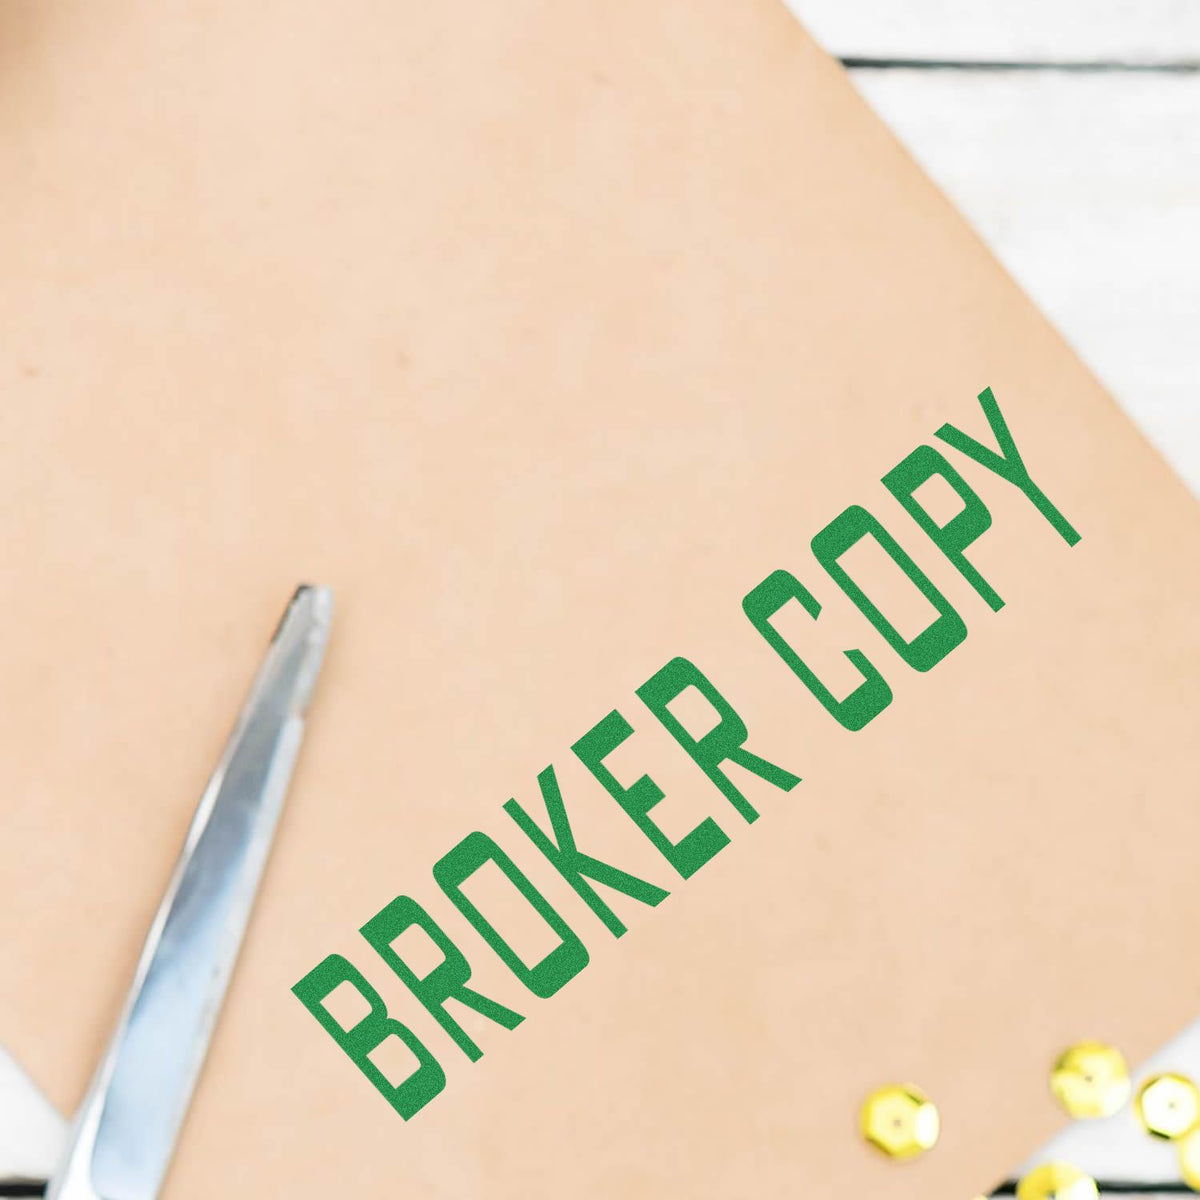 Broker Copy Rubber Stamp In Use